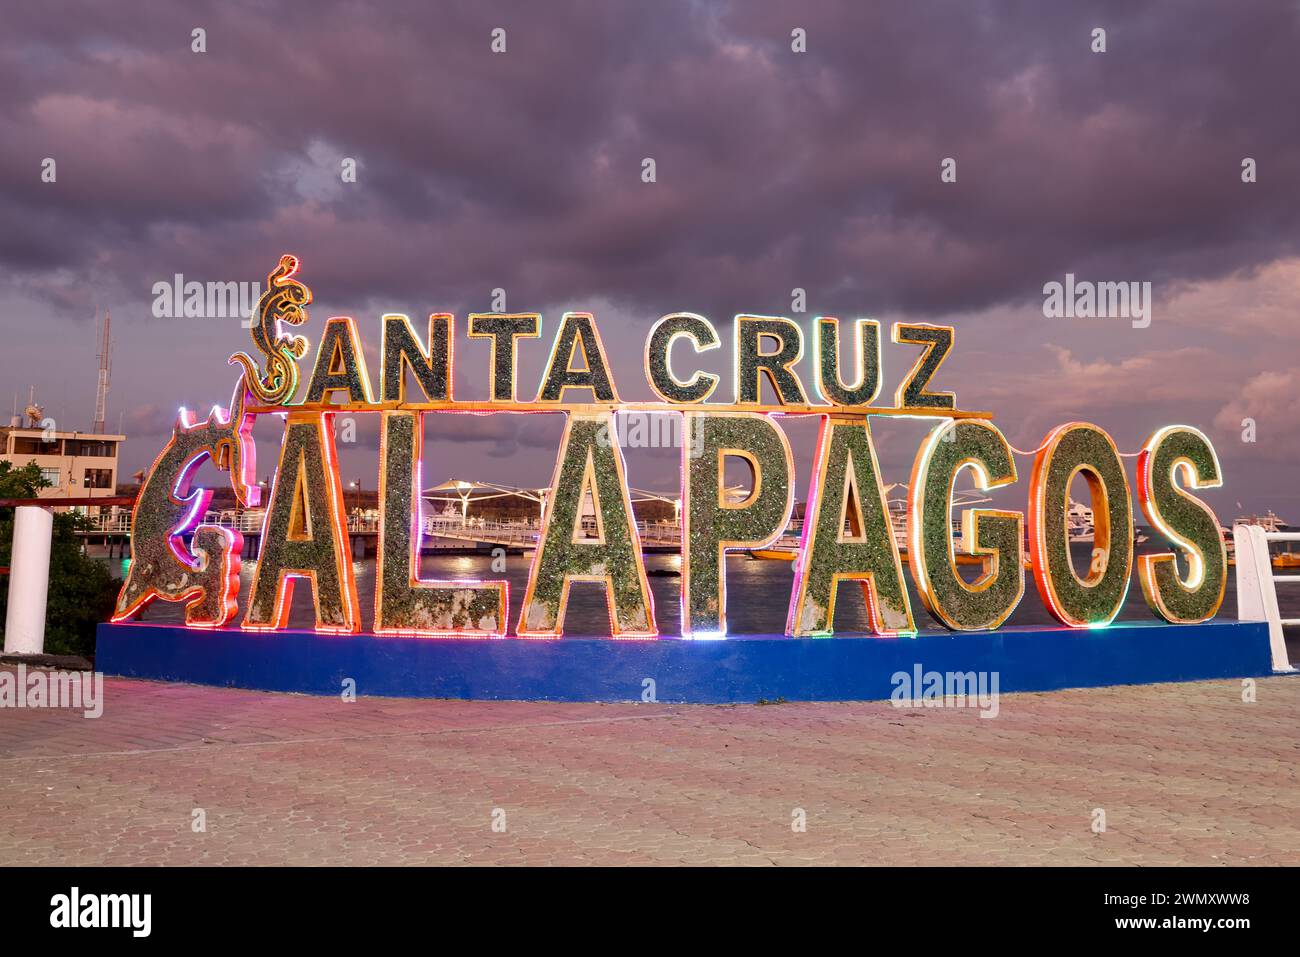 Santa Cruz Galapagos -Text Sign at the Puerto Ayora harbor during sunset withled lights on the galapagos island, Ecuador Stock Photo